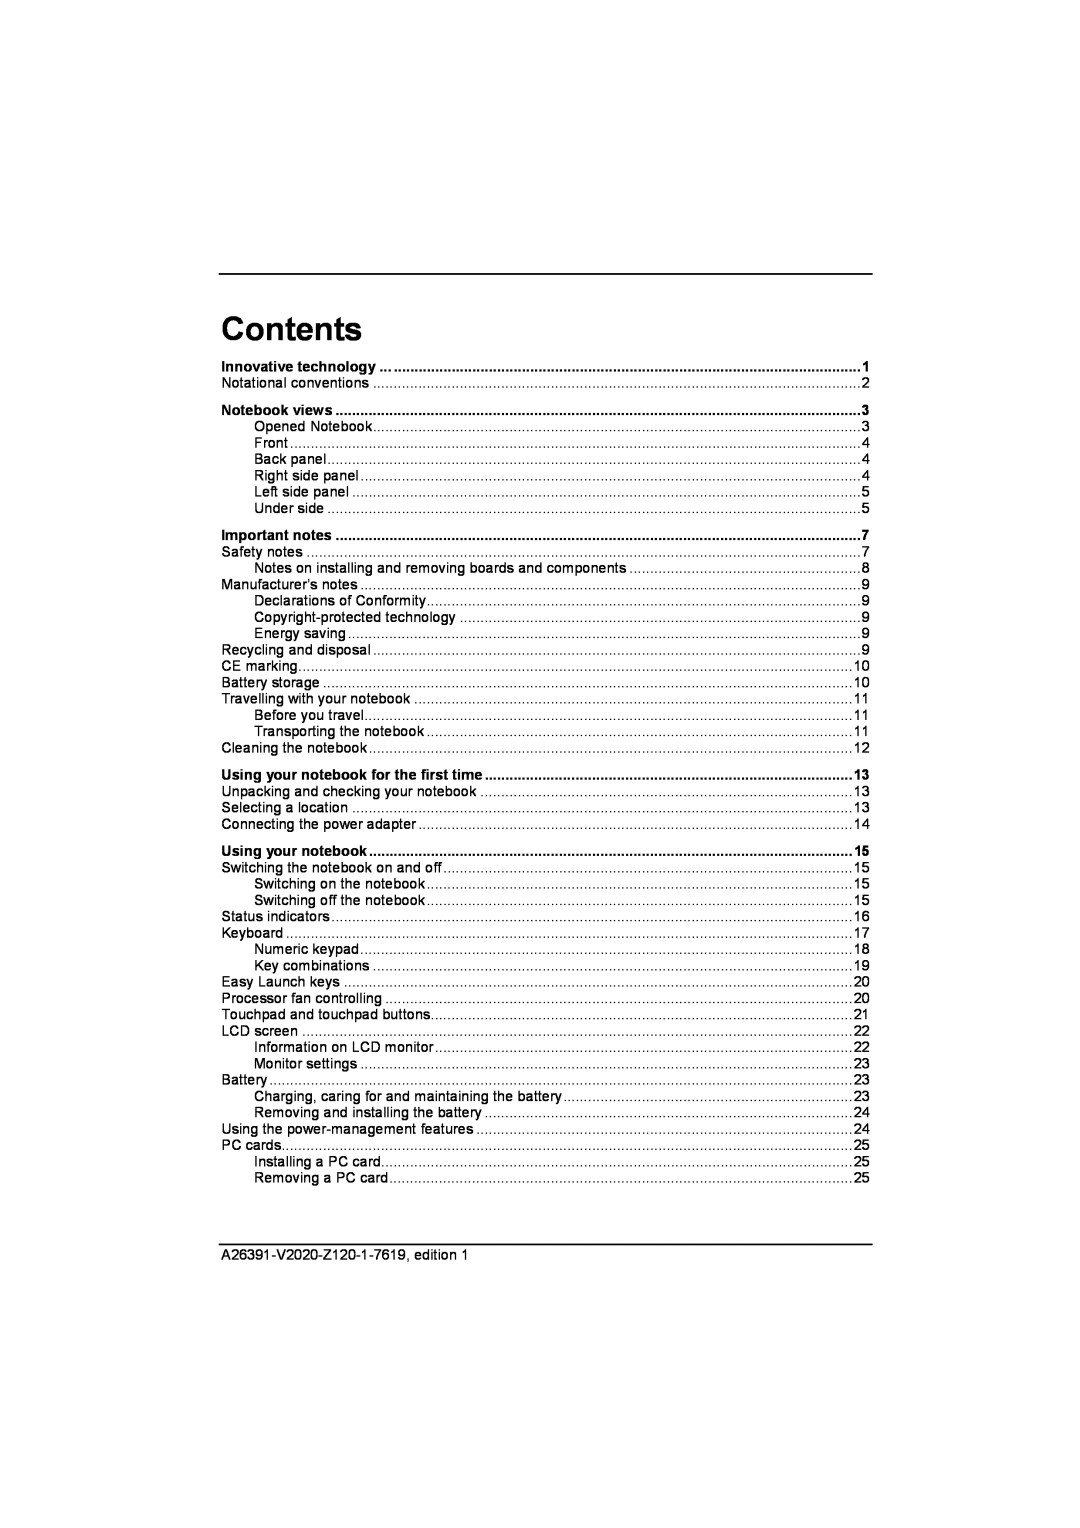 Fujitsu Siemens Computers V2020 manual Contents 